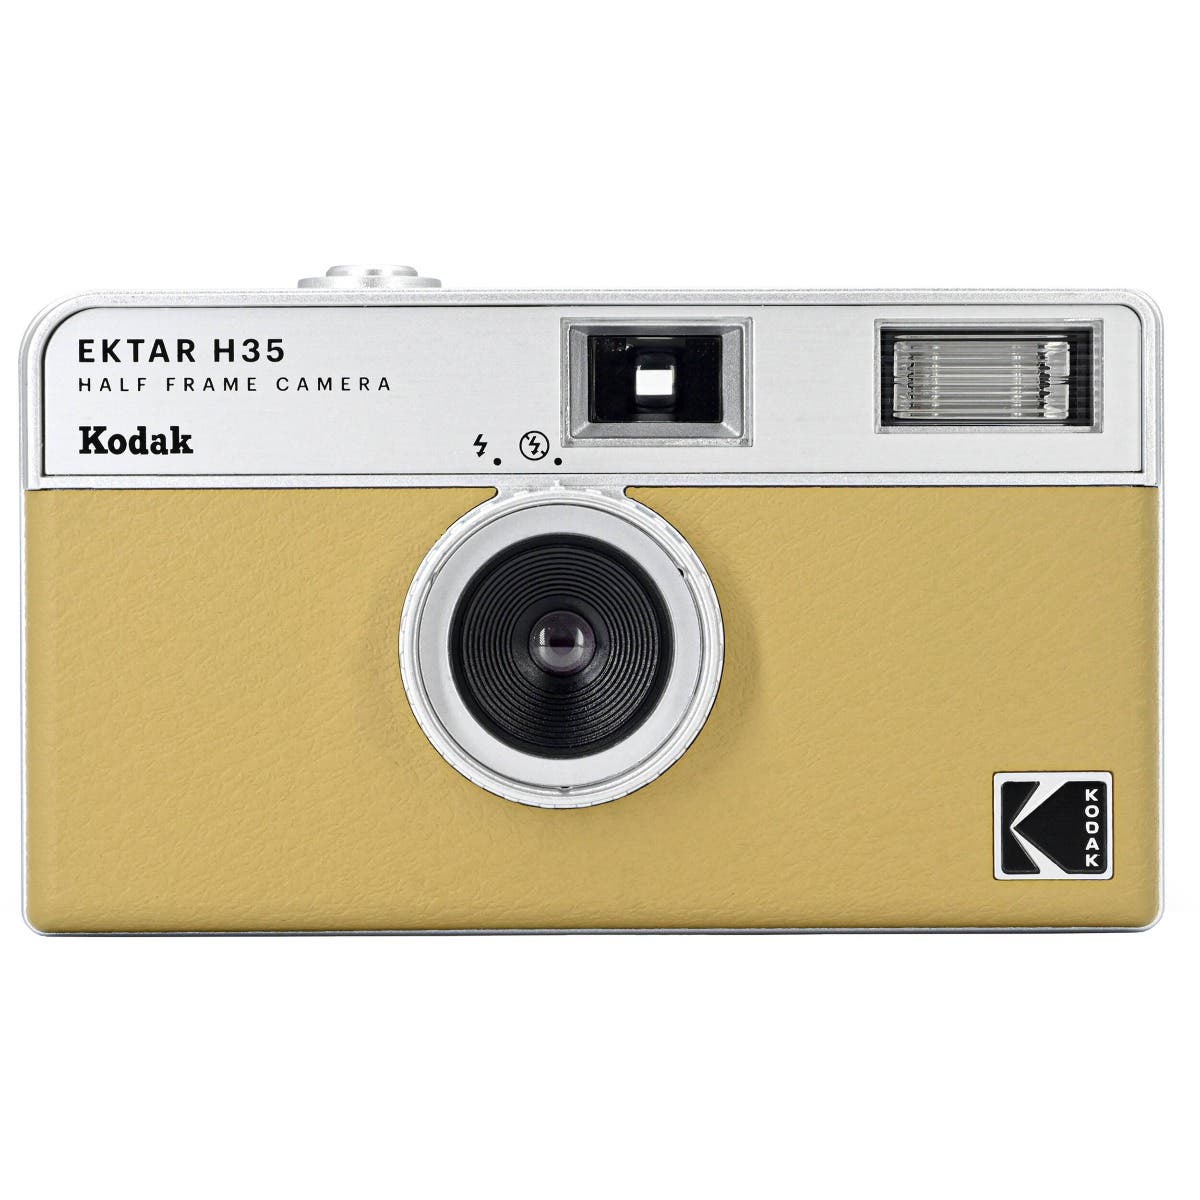 Kodak Ektar H35 Half Frame Film Camera (Sand)